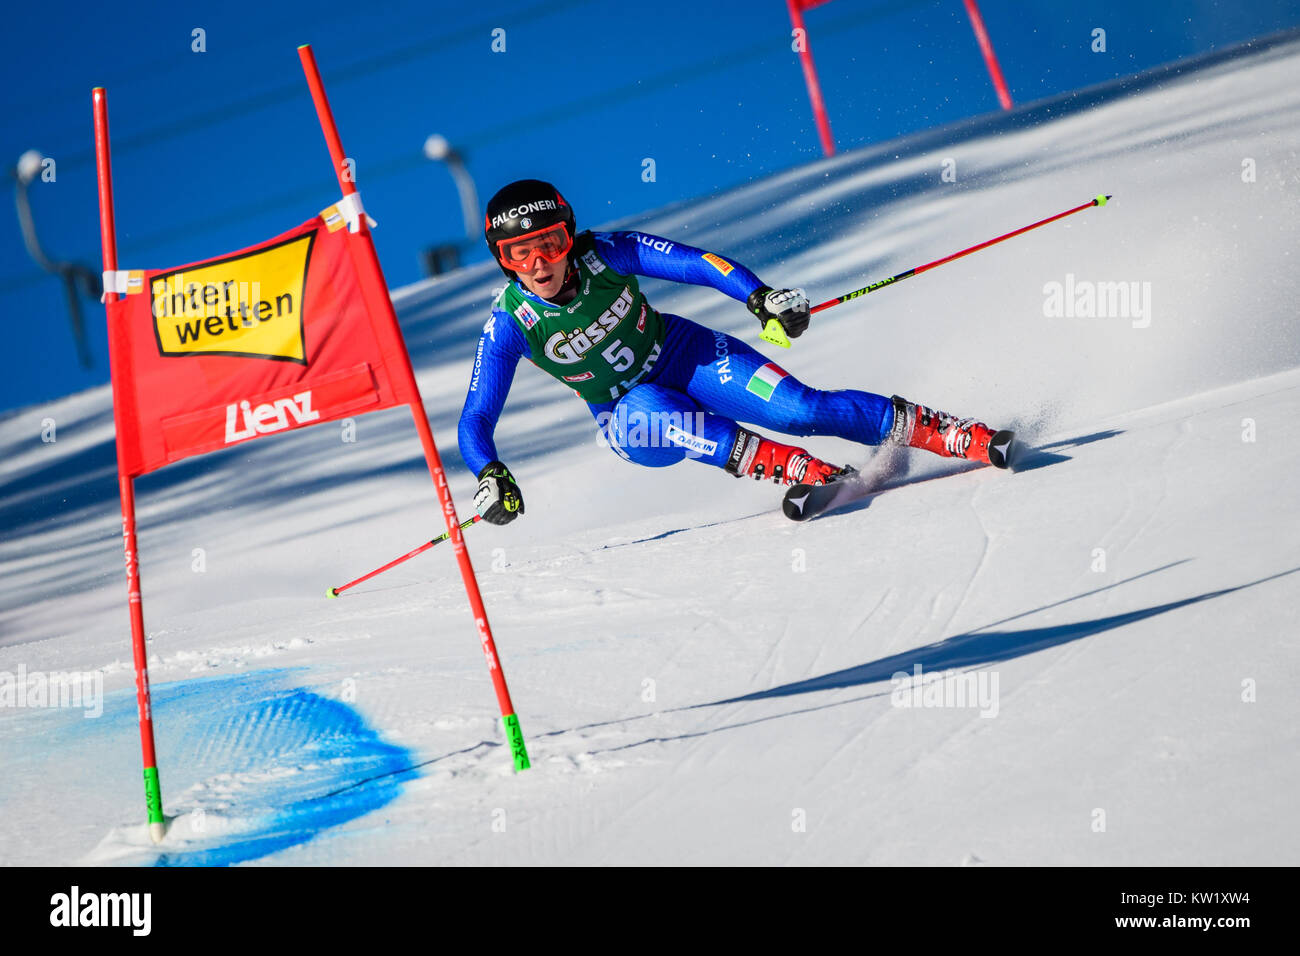 Lienz, Austria. 29 dic, 2017. Sofia Goggia de Italia compite en el FIS World Cup de slalom gigante damas carrera en Lienz, Austria el 29 de diciembre de 2017. Crédito: Jure Makovec/Alamy Live News Foto de stock